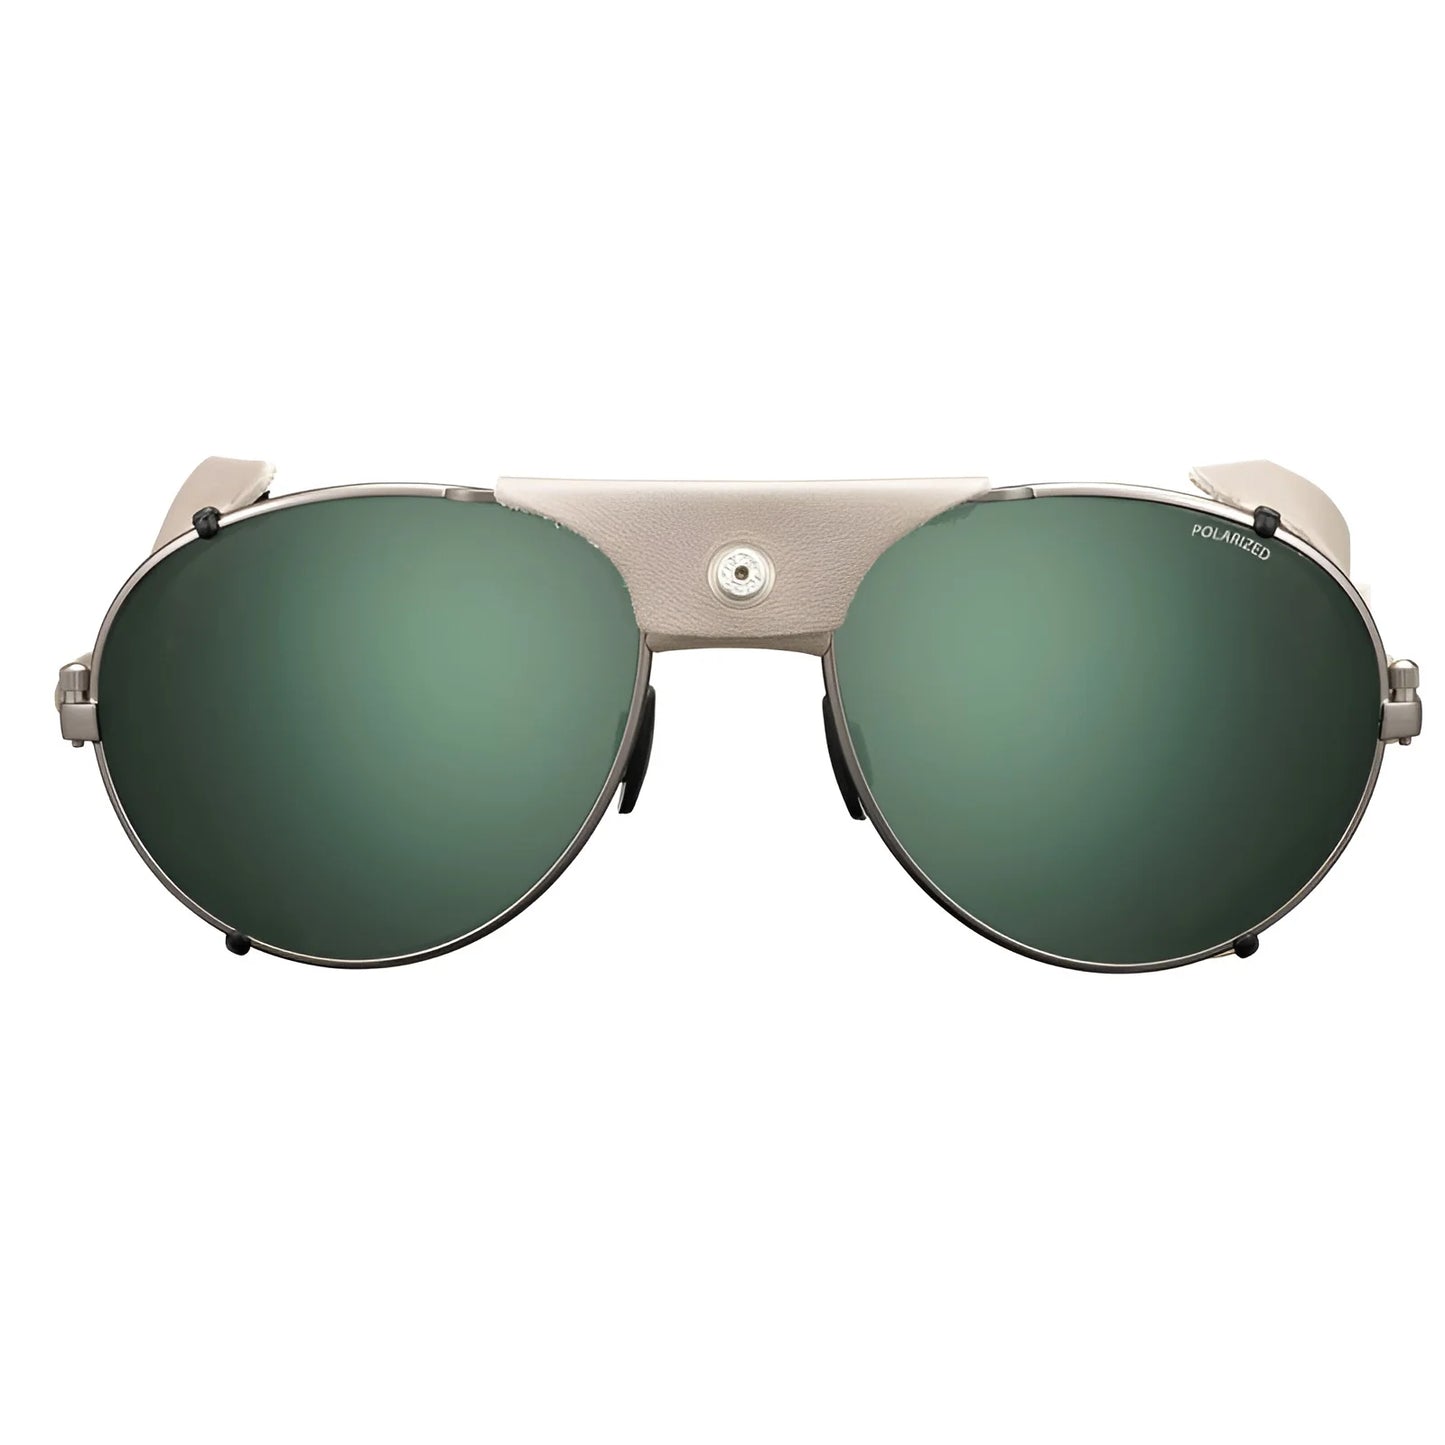 Julbo Cham Sunglasses | Size 58